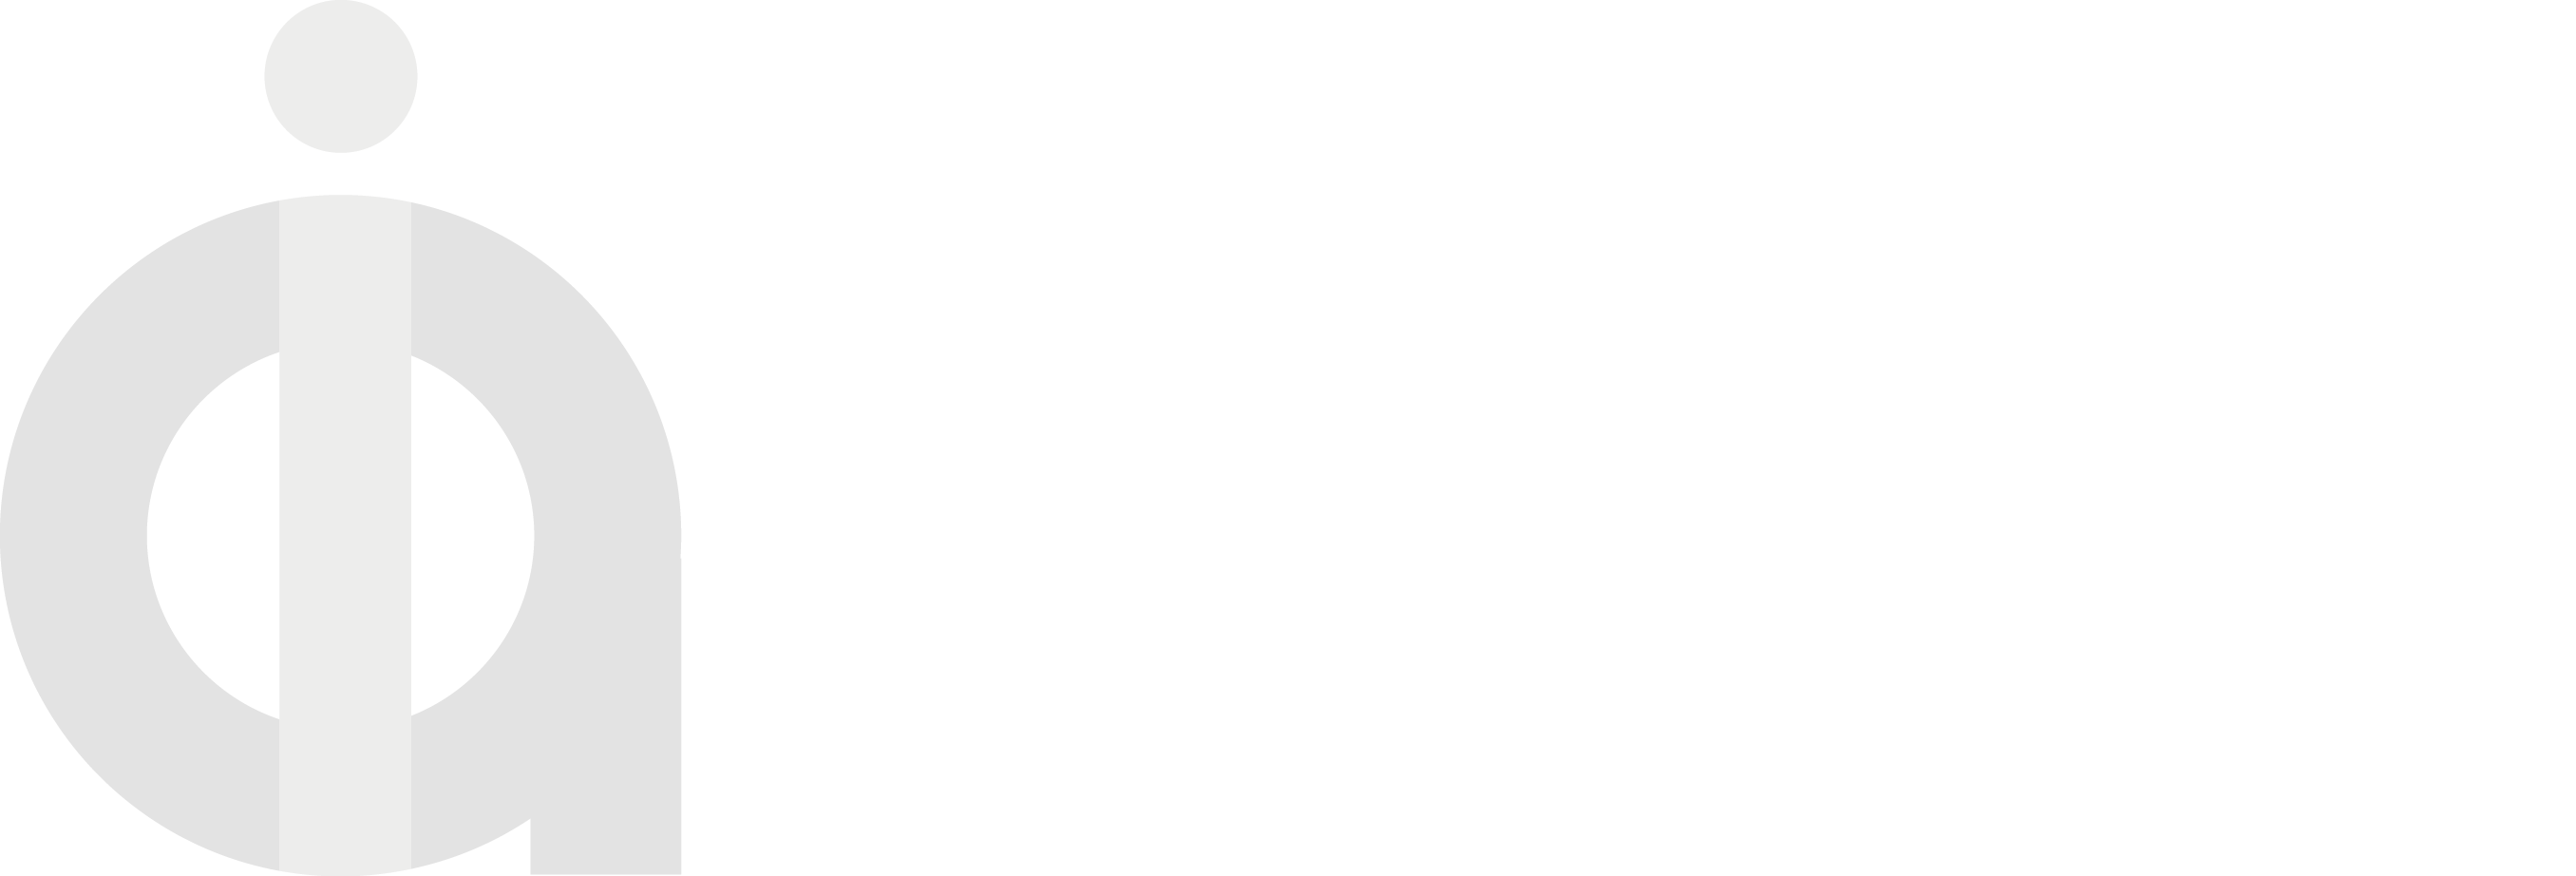 Academia Internacional